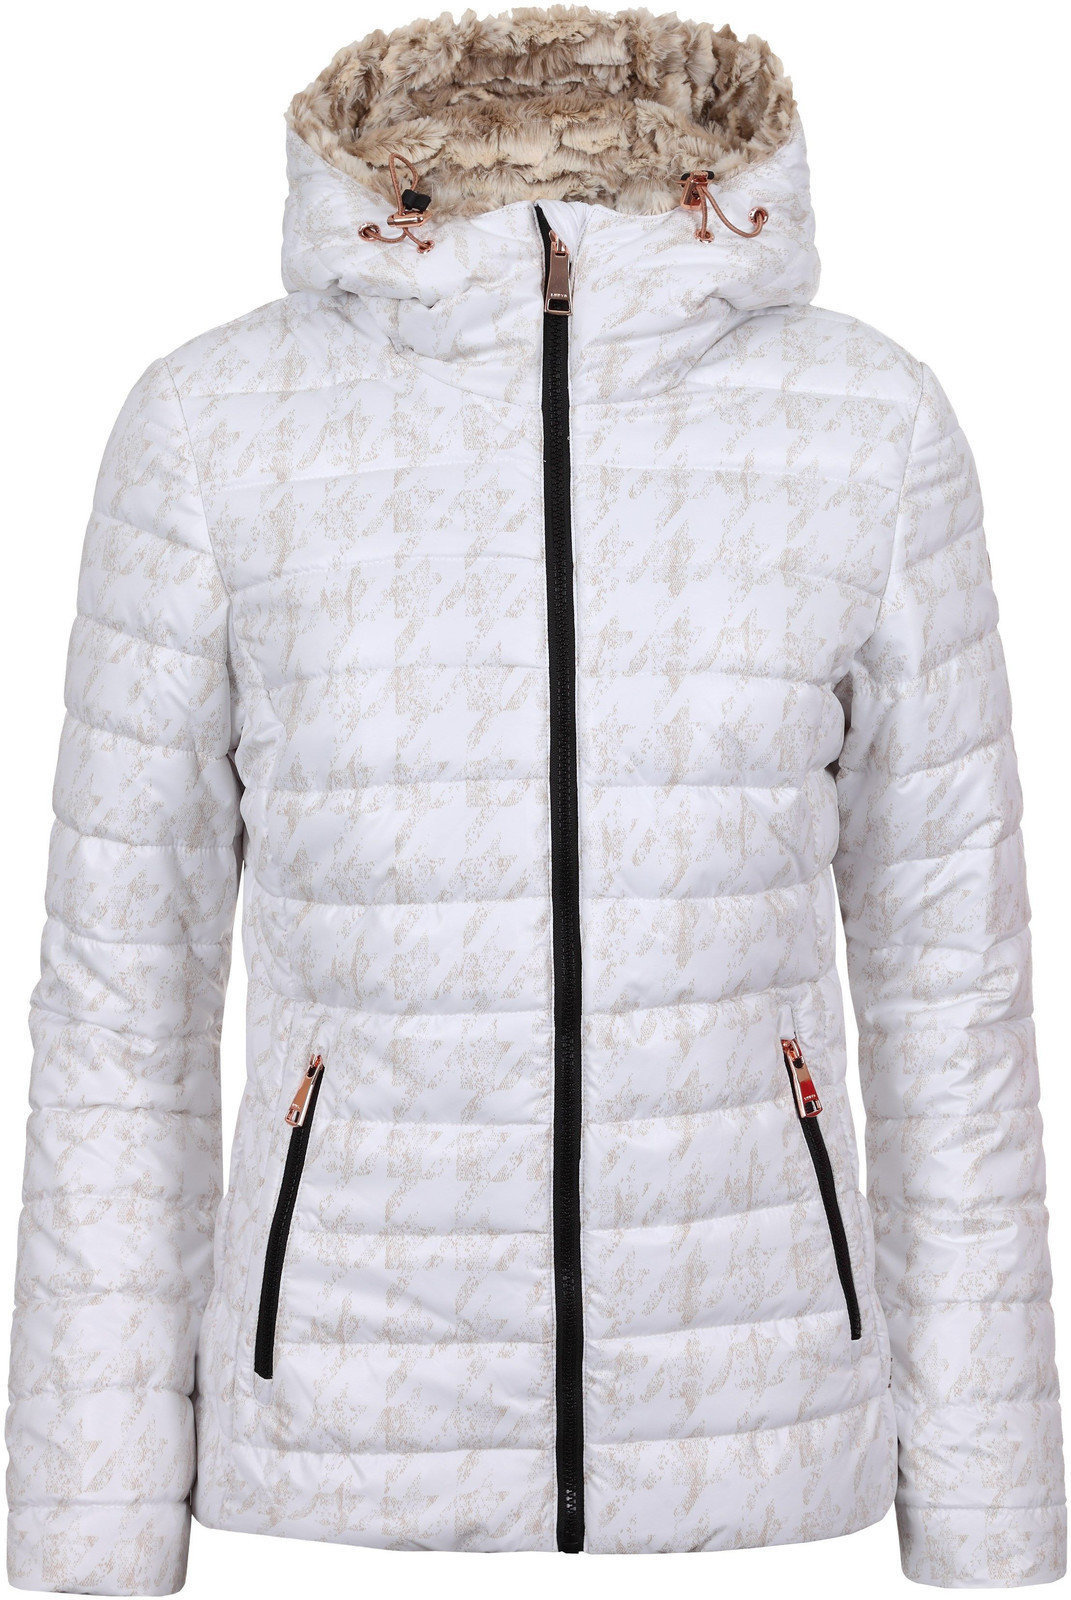 Ski Jacket Luhta Bettina Optic White 40